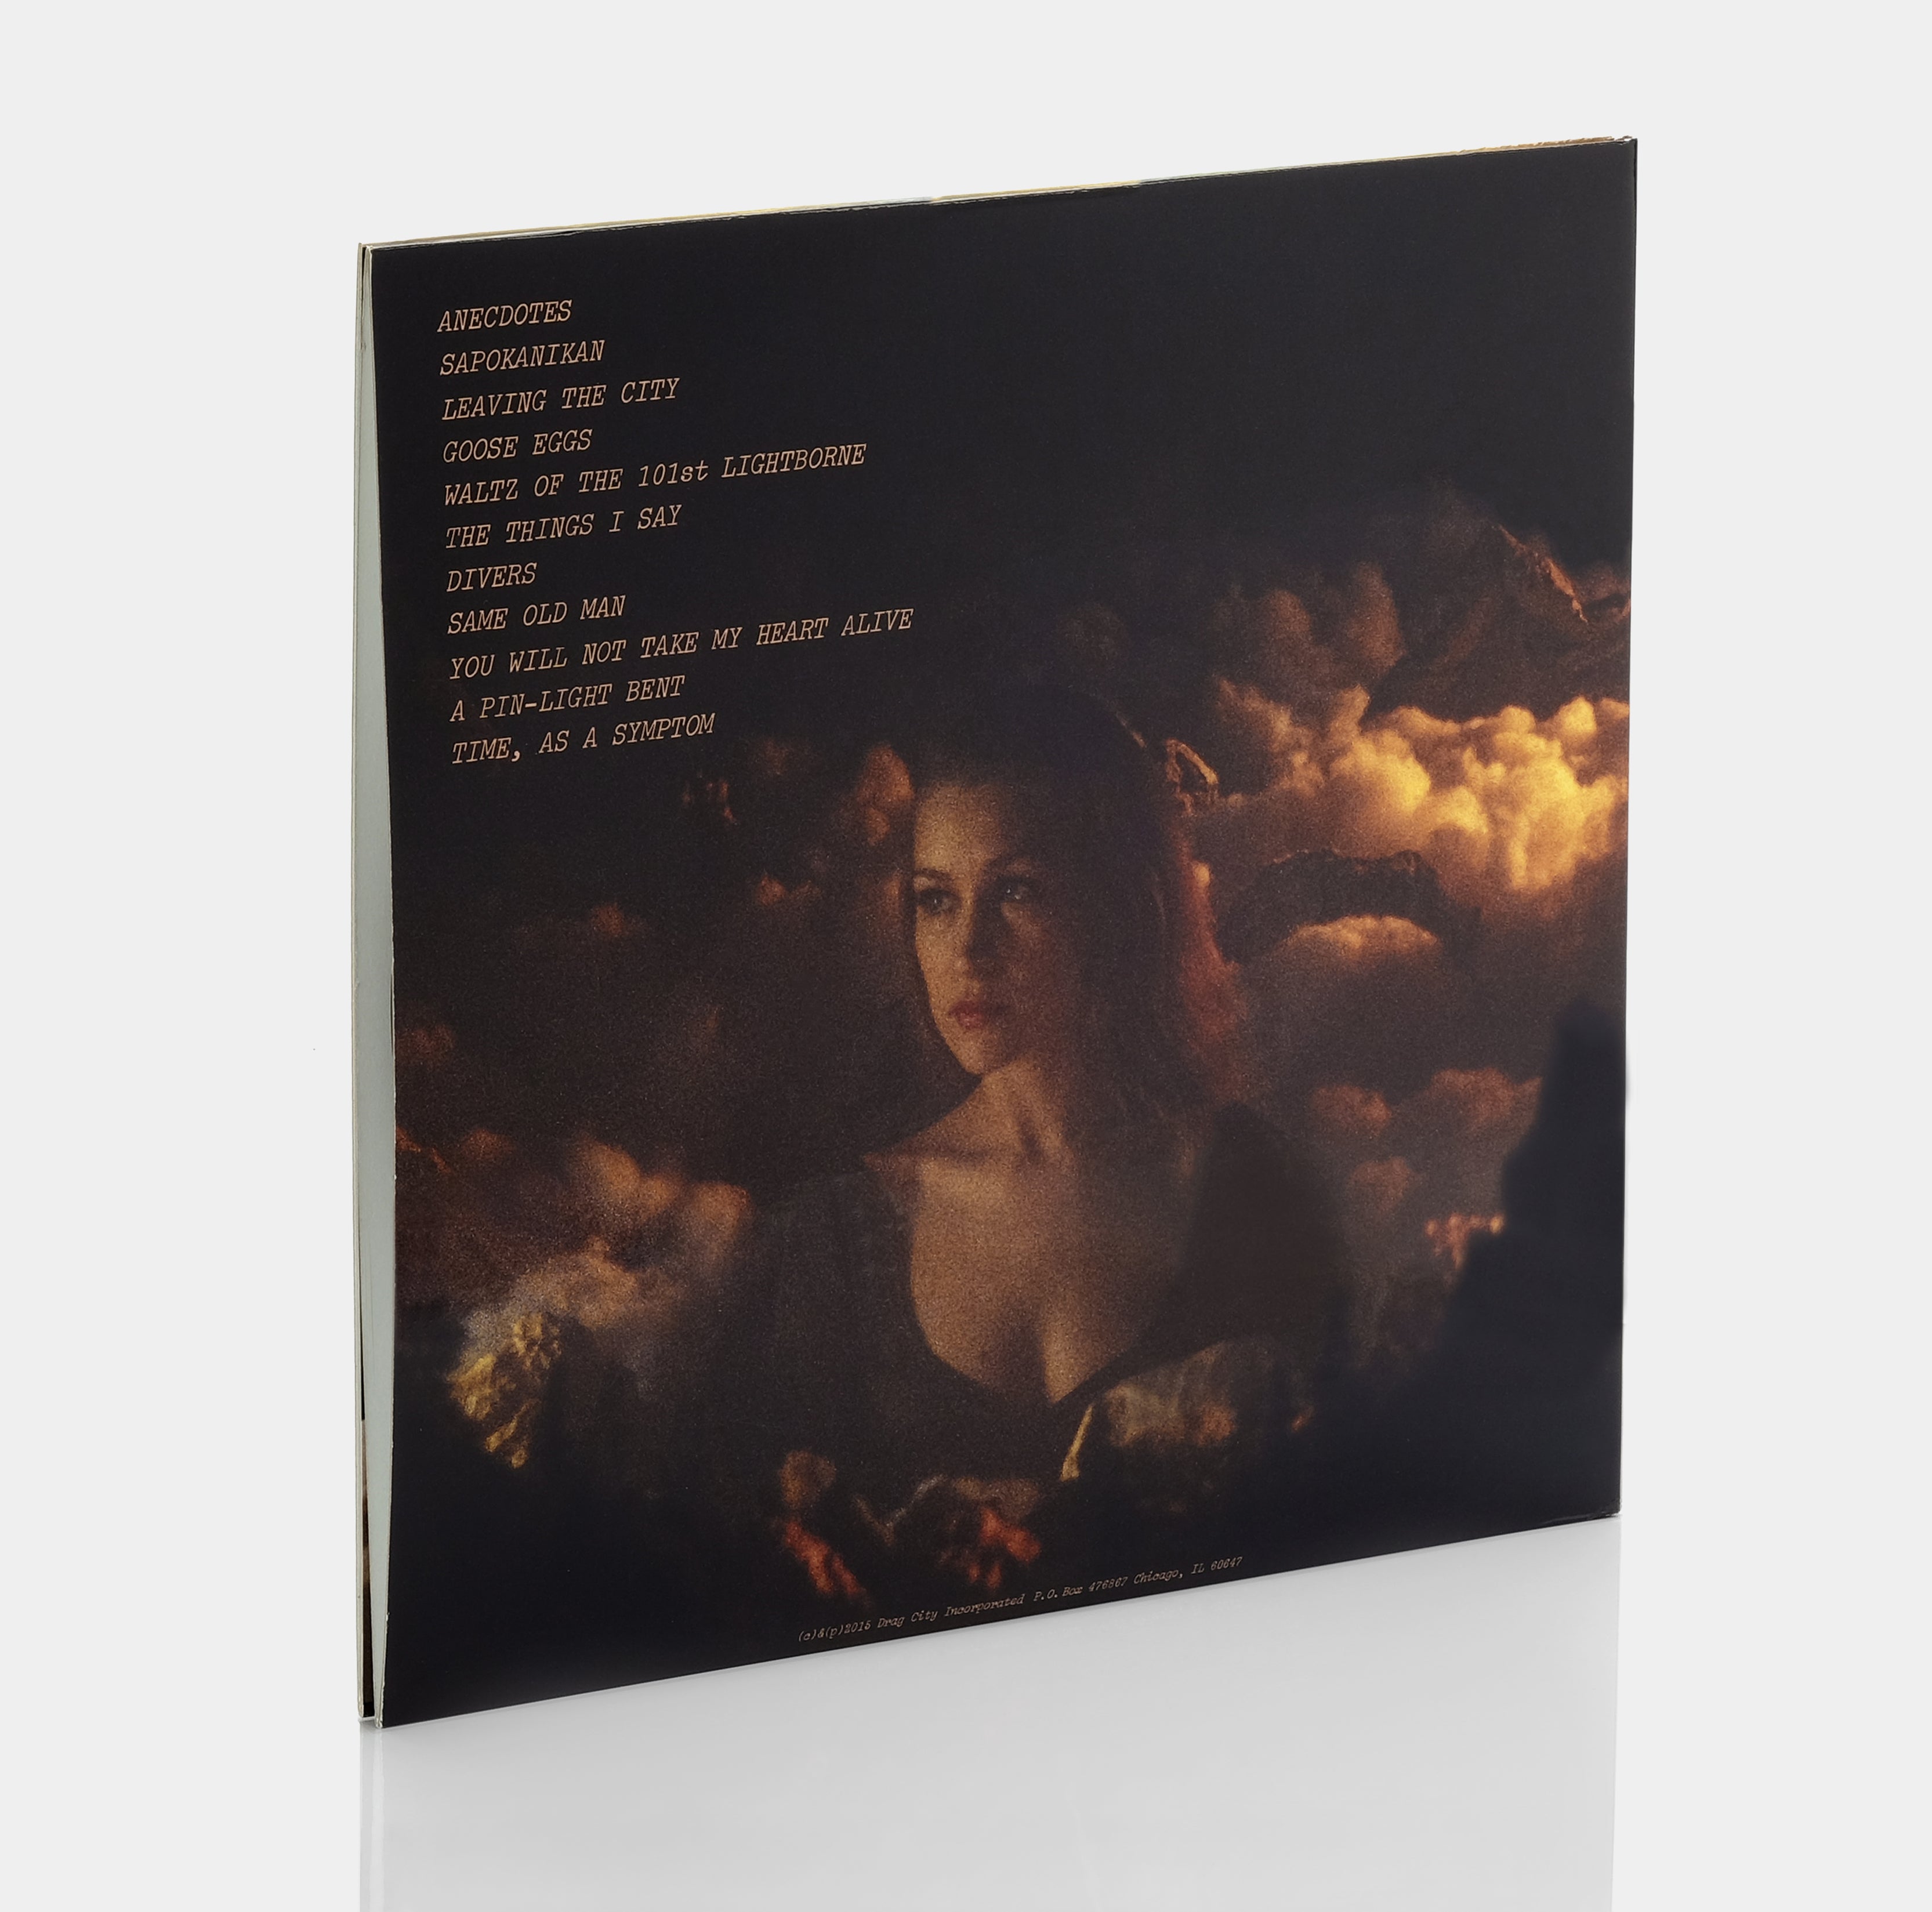 Joanna Newsom - Divers 2xLP Vinyl Record